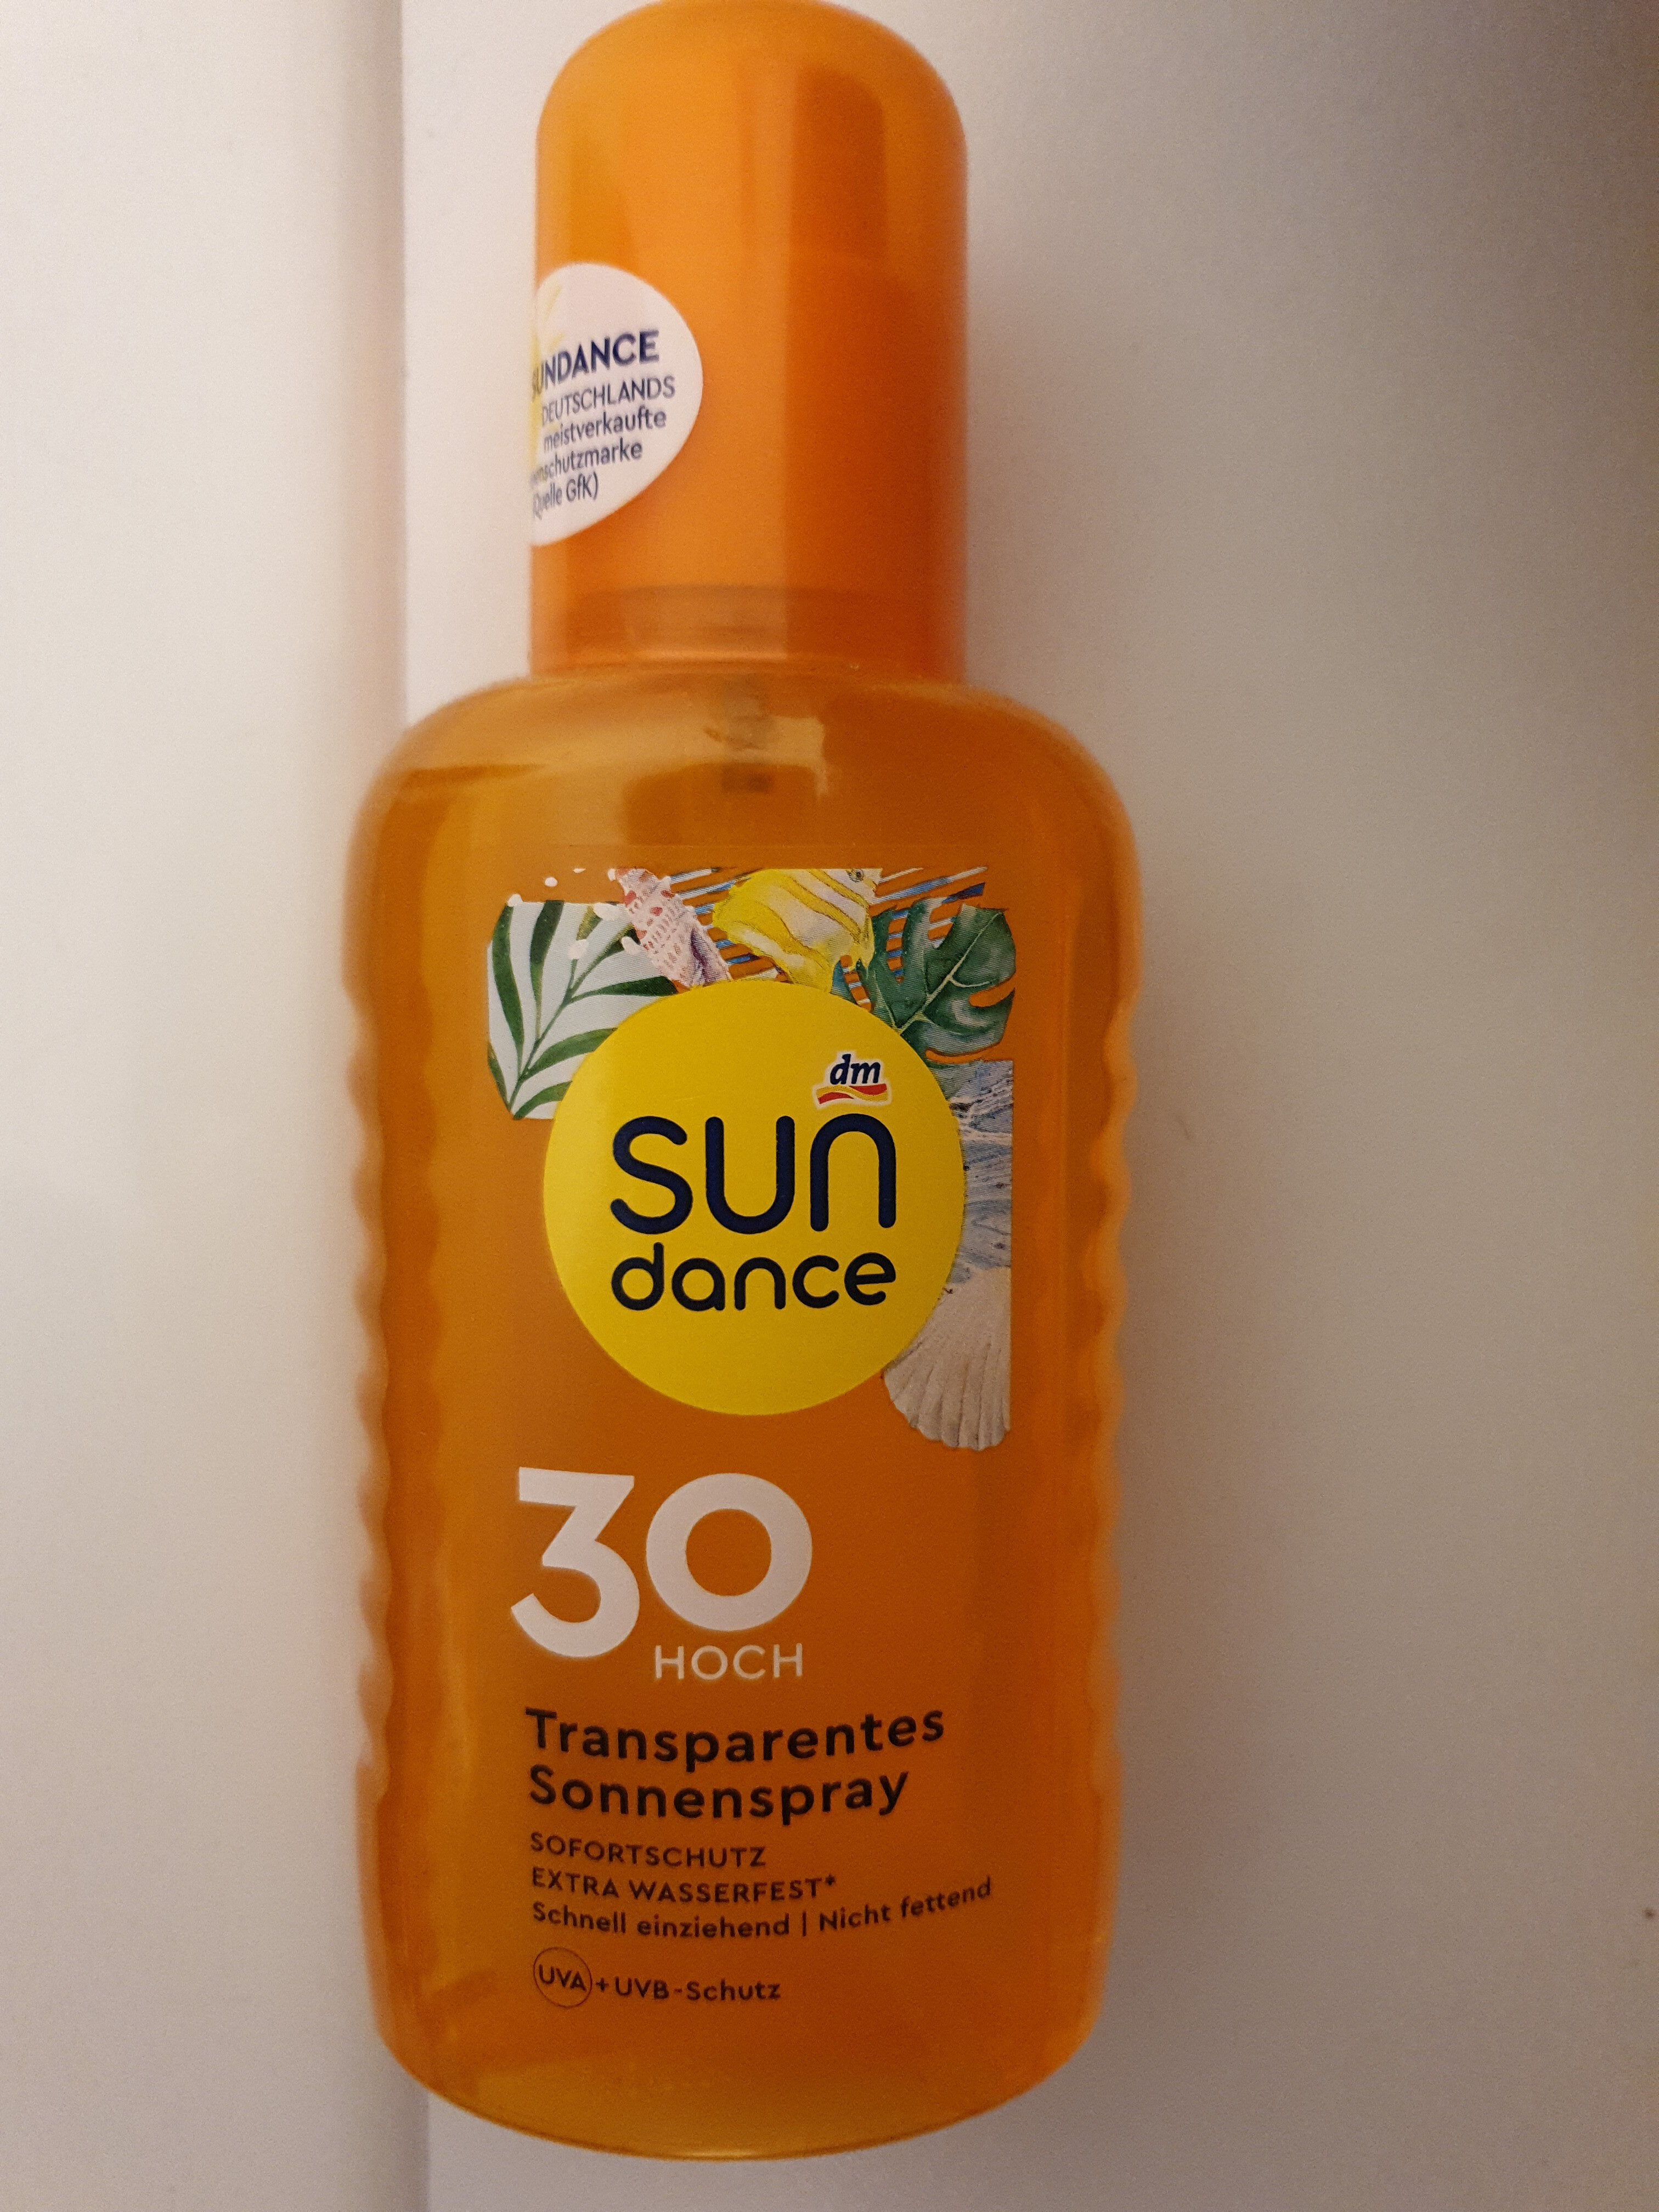 sun dance 30 transparentes sonnenspray - Product - de